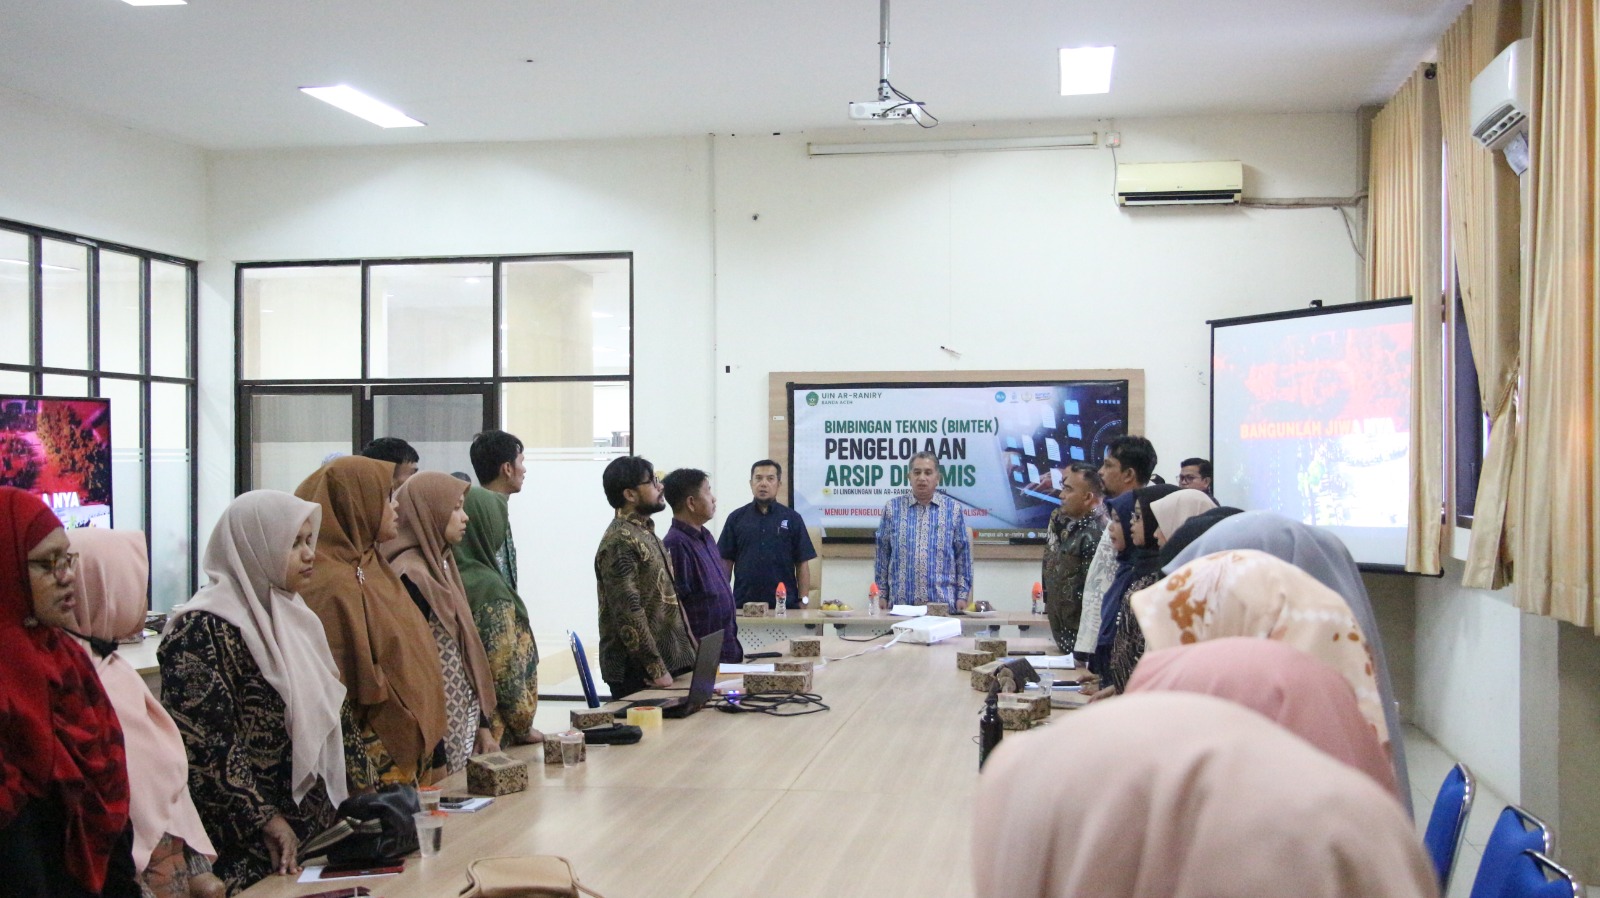 BAST-ANRI Berikan Bimbingan Teknis Pengelolaan Arsip Dinamis di Lingkungan UIN Ar-Raniry Banda Aceh